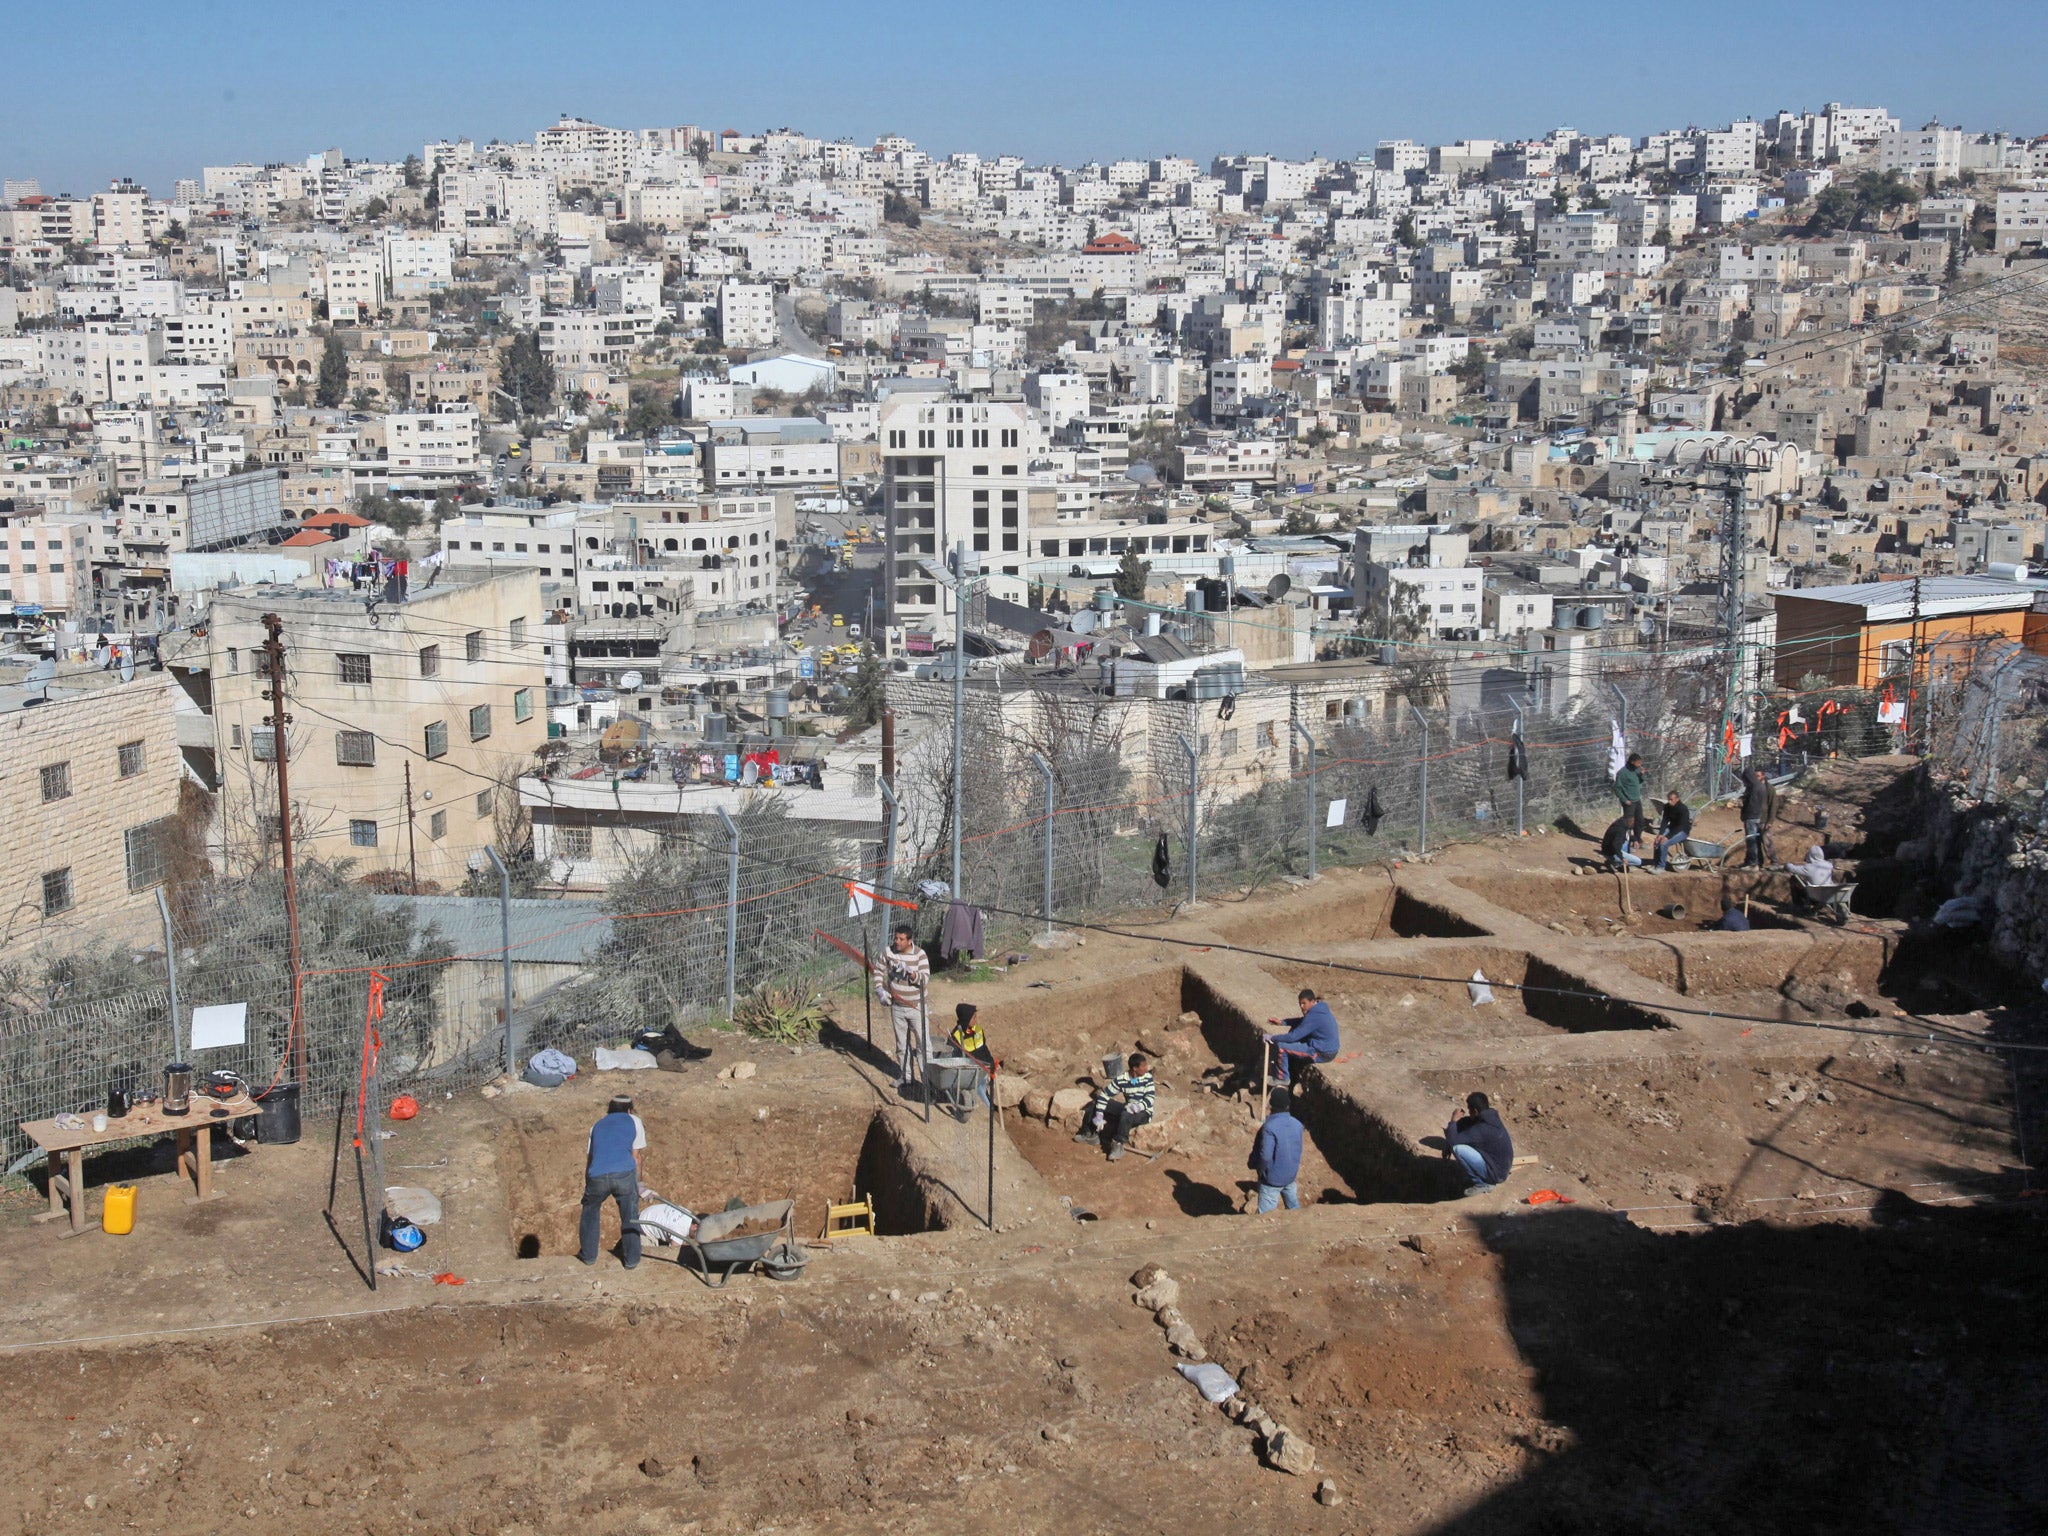 Hebron has a population of 250,000